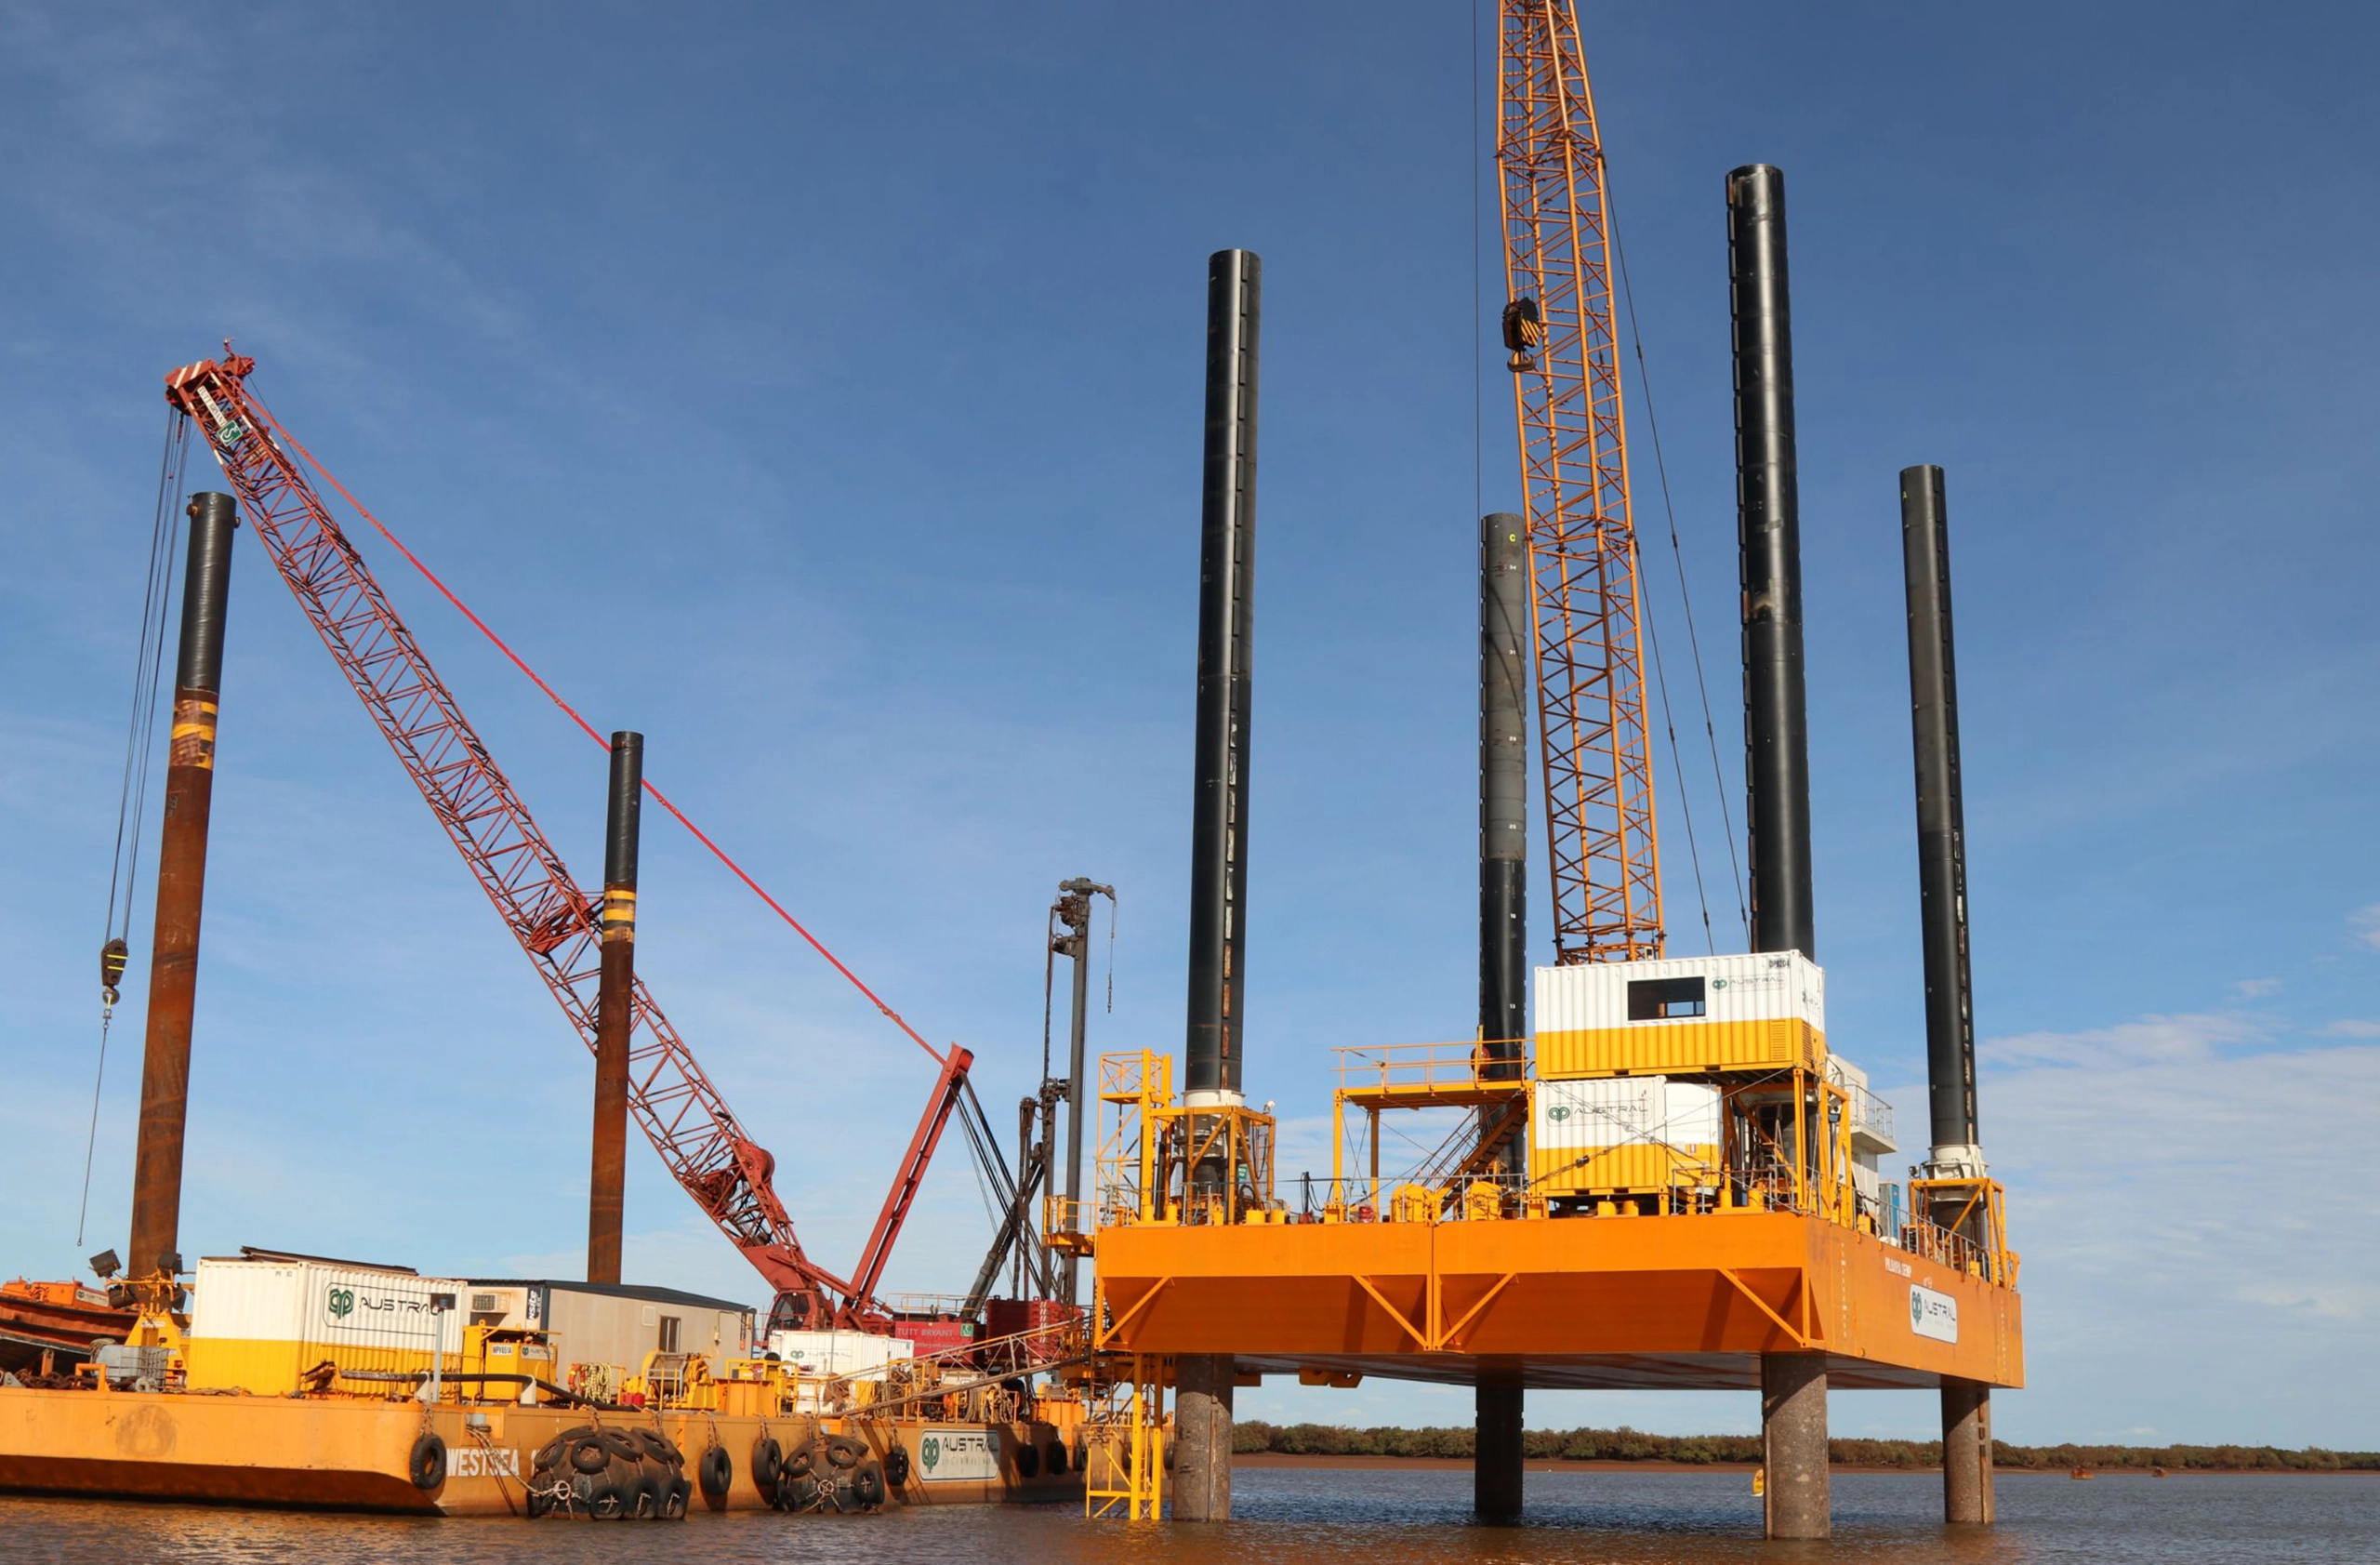 A big yellow crane and construction equipment